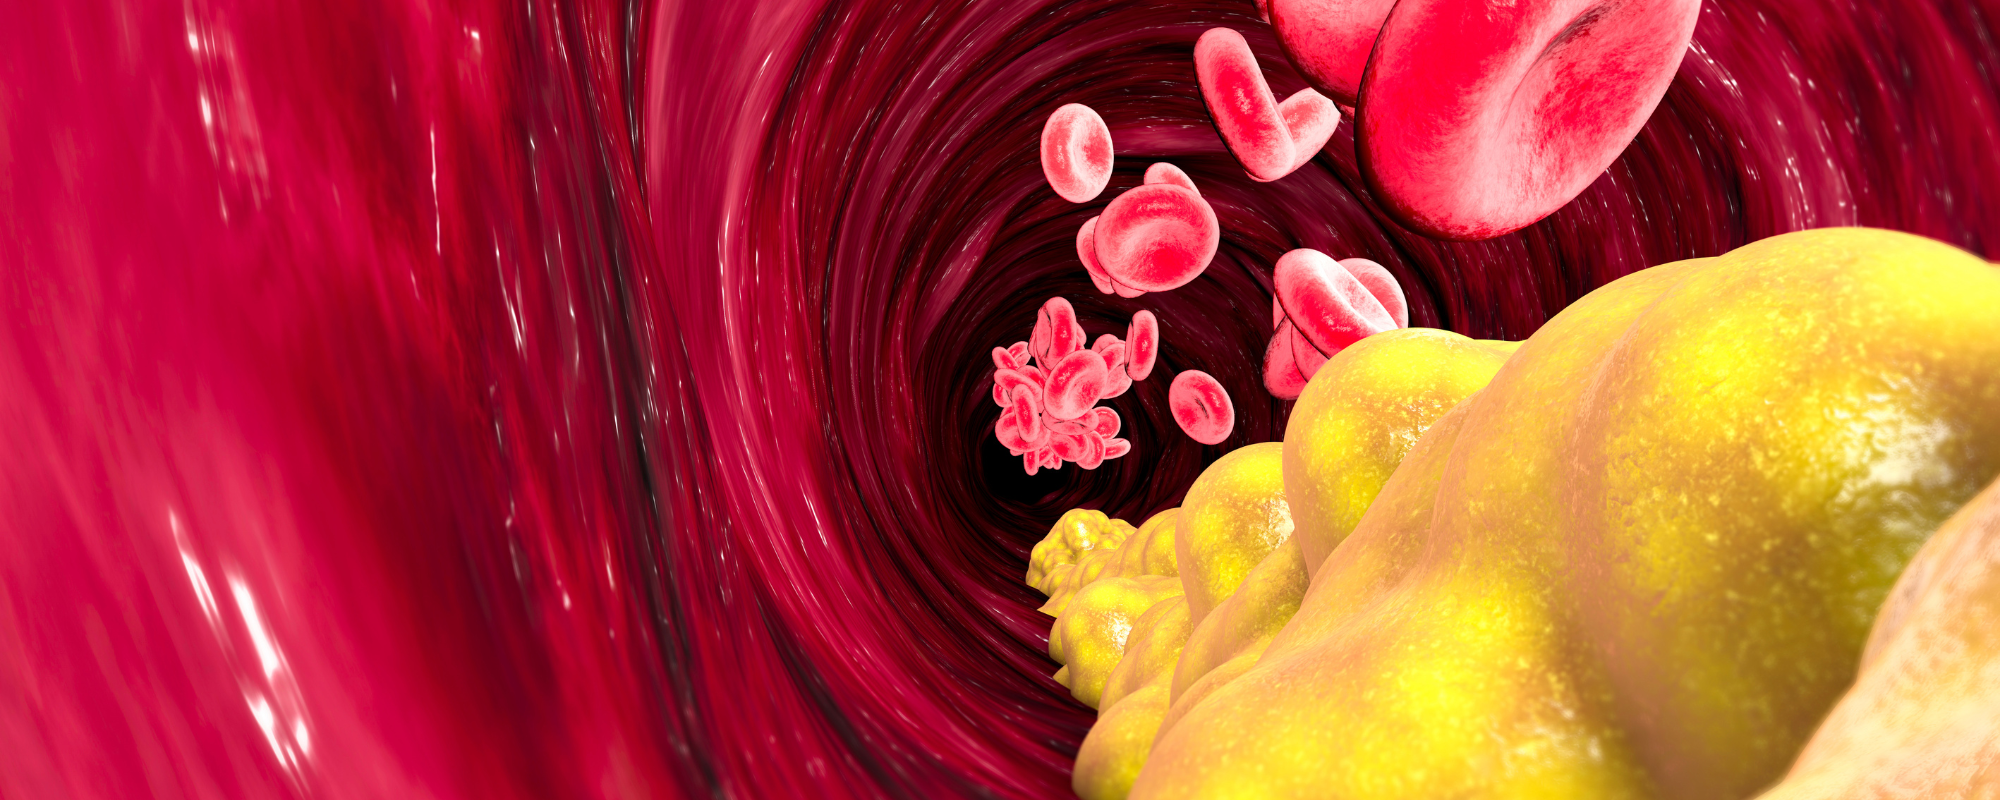 A Blood Lipid traveling through a blood vessel